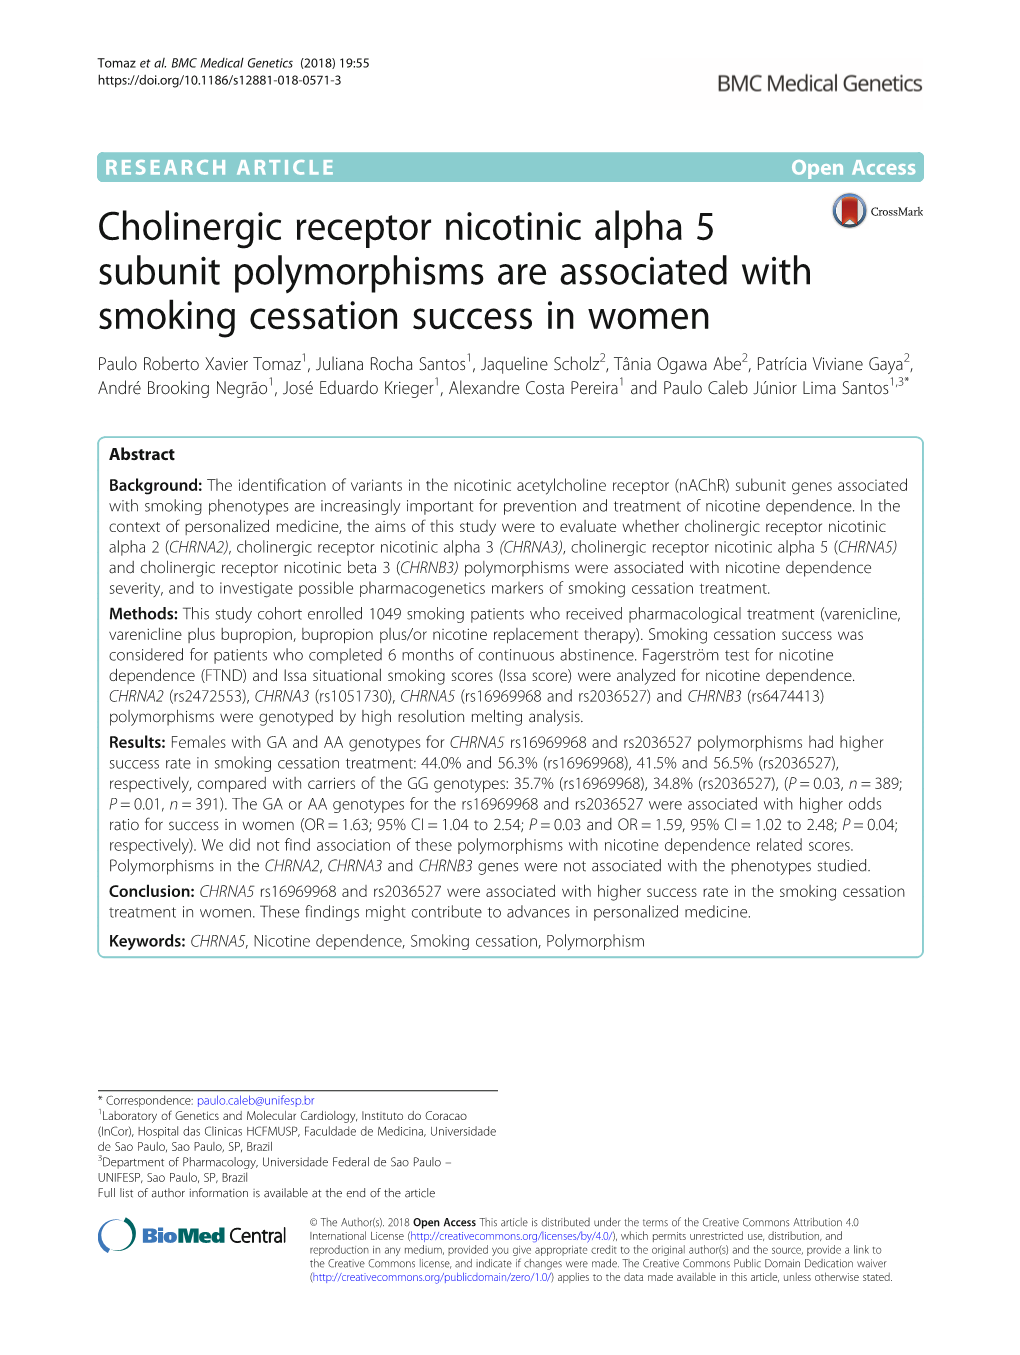 Cholinergic Receptor Nicotinic Alpha 5 Subunit Polymorphisms Are